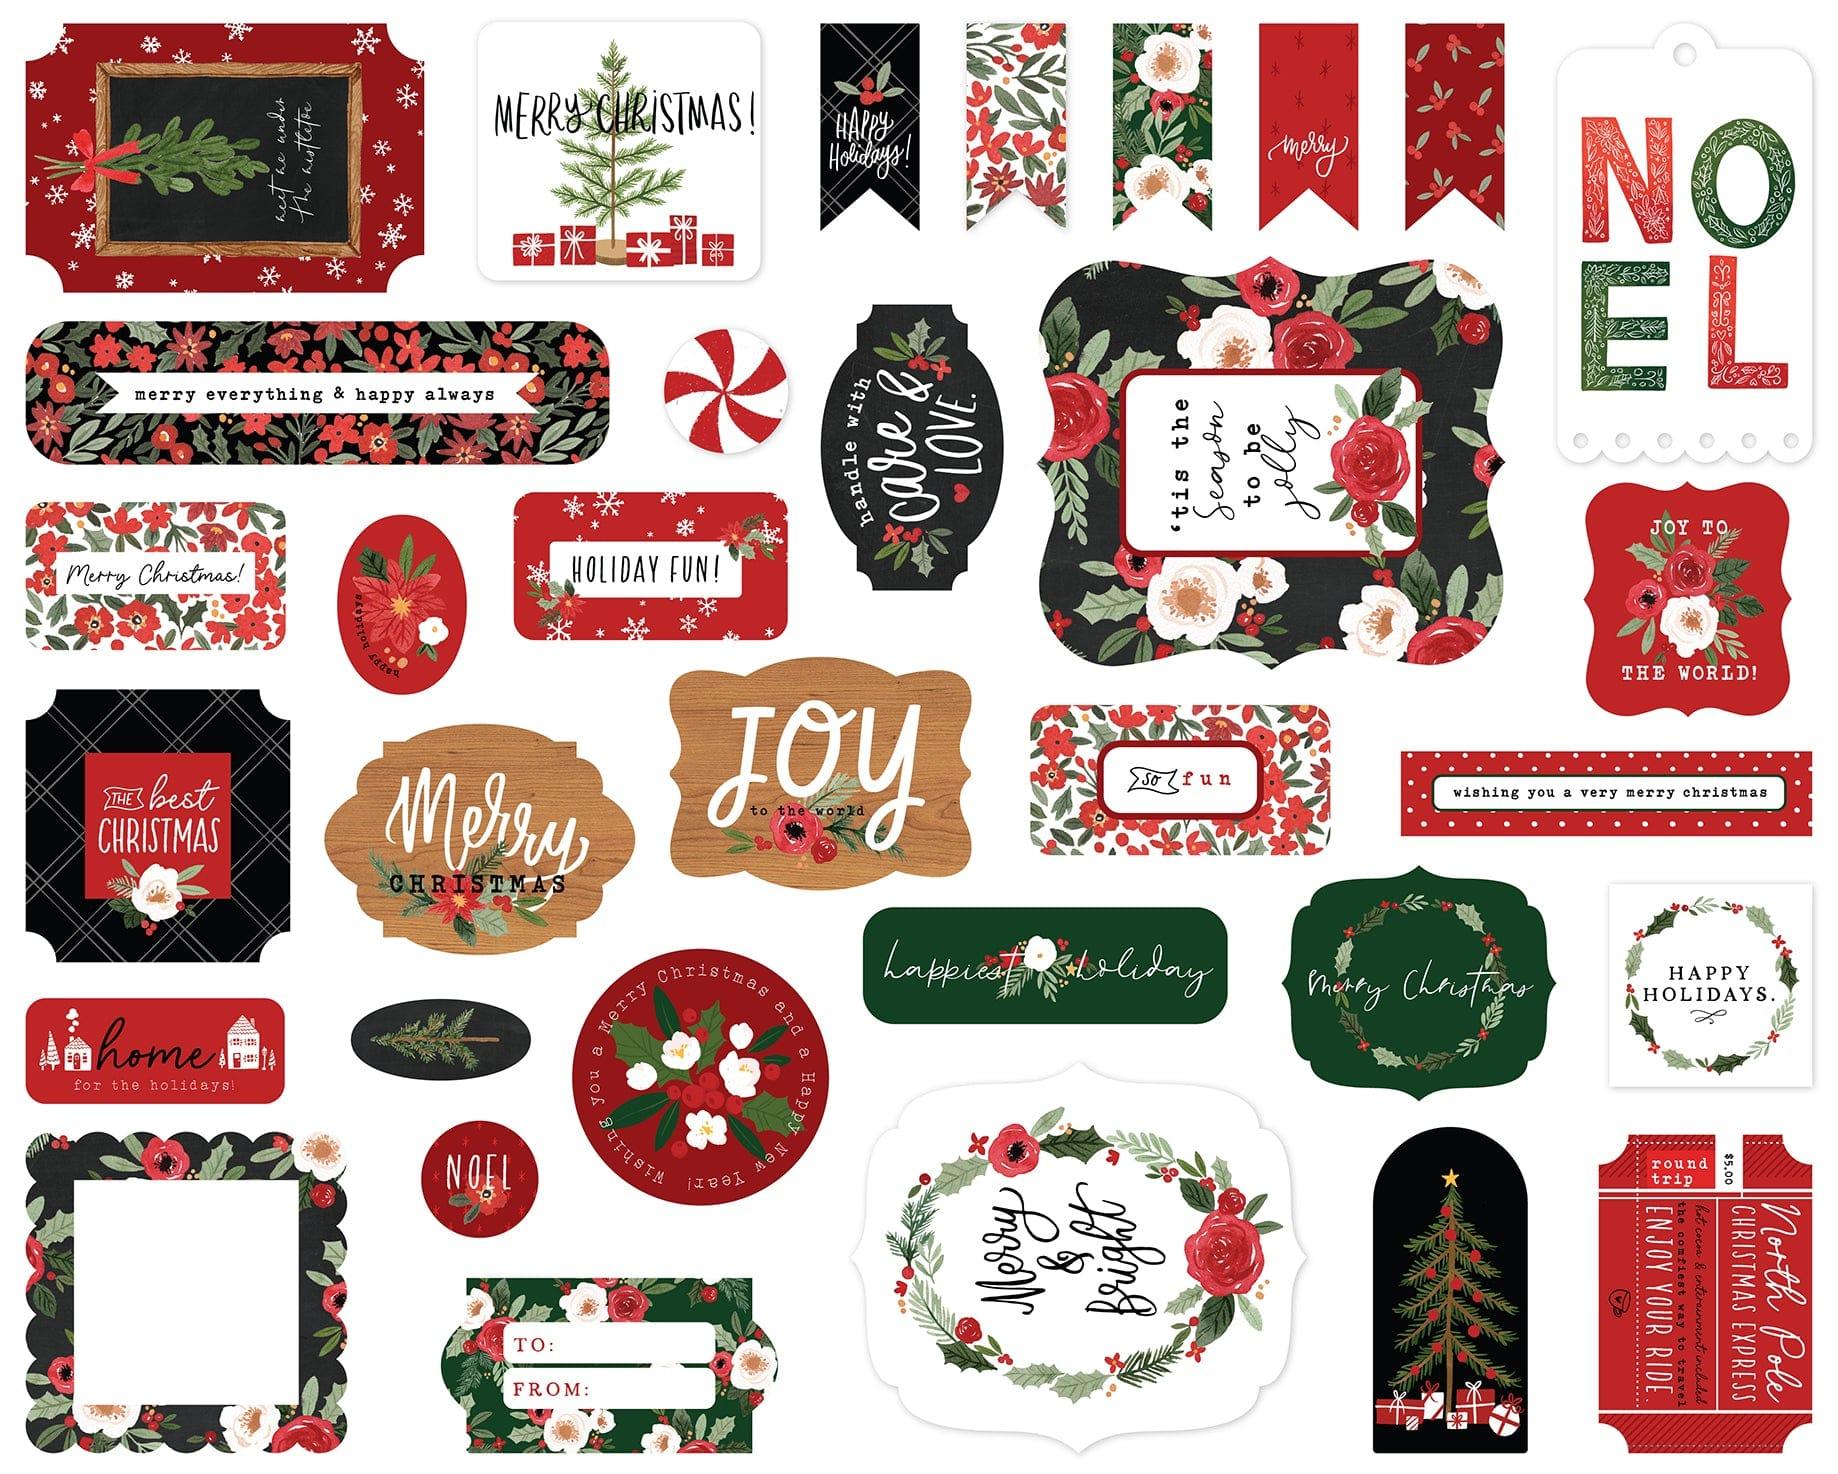 Happy Christmas Collection 5 x 5 Scrapbook Ephemera Die Cuts by Carta Bella - Scrapbook Supply Companies